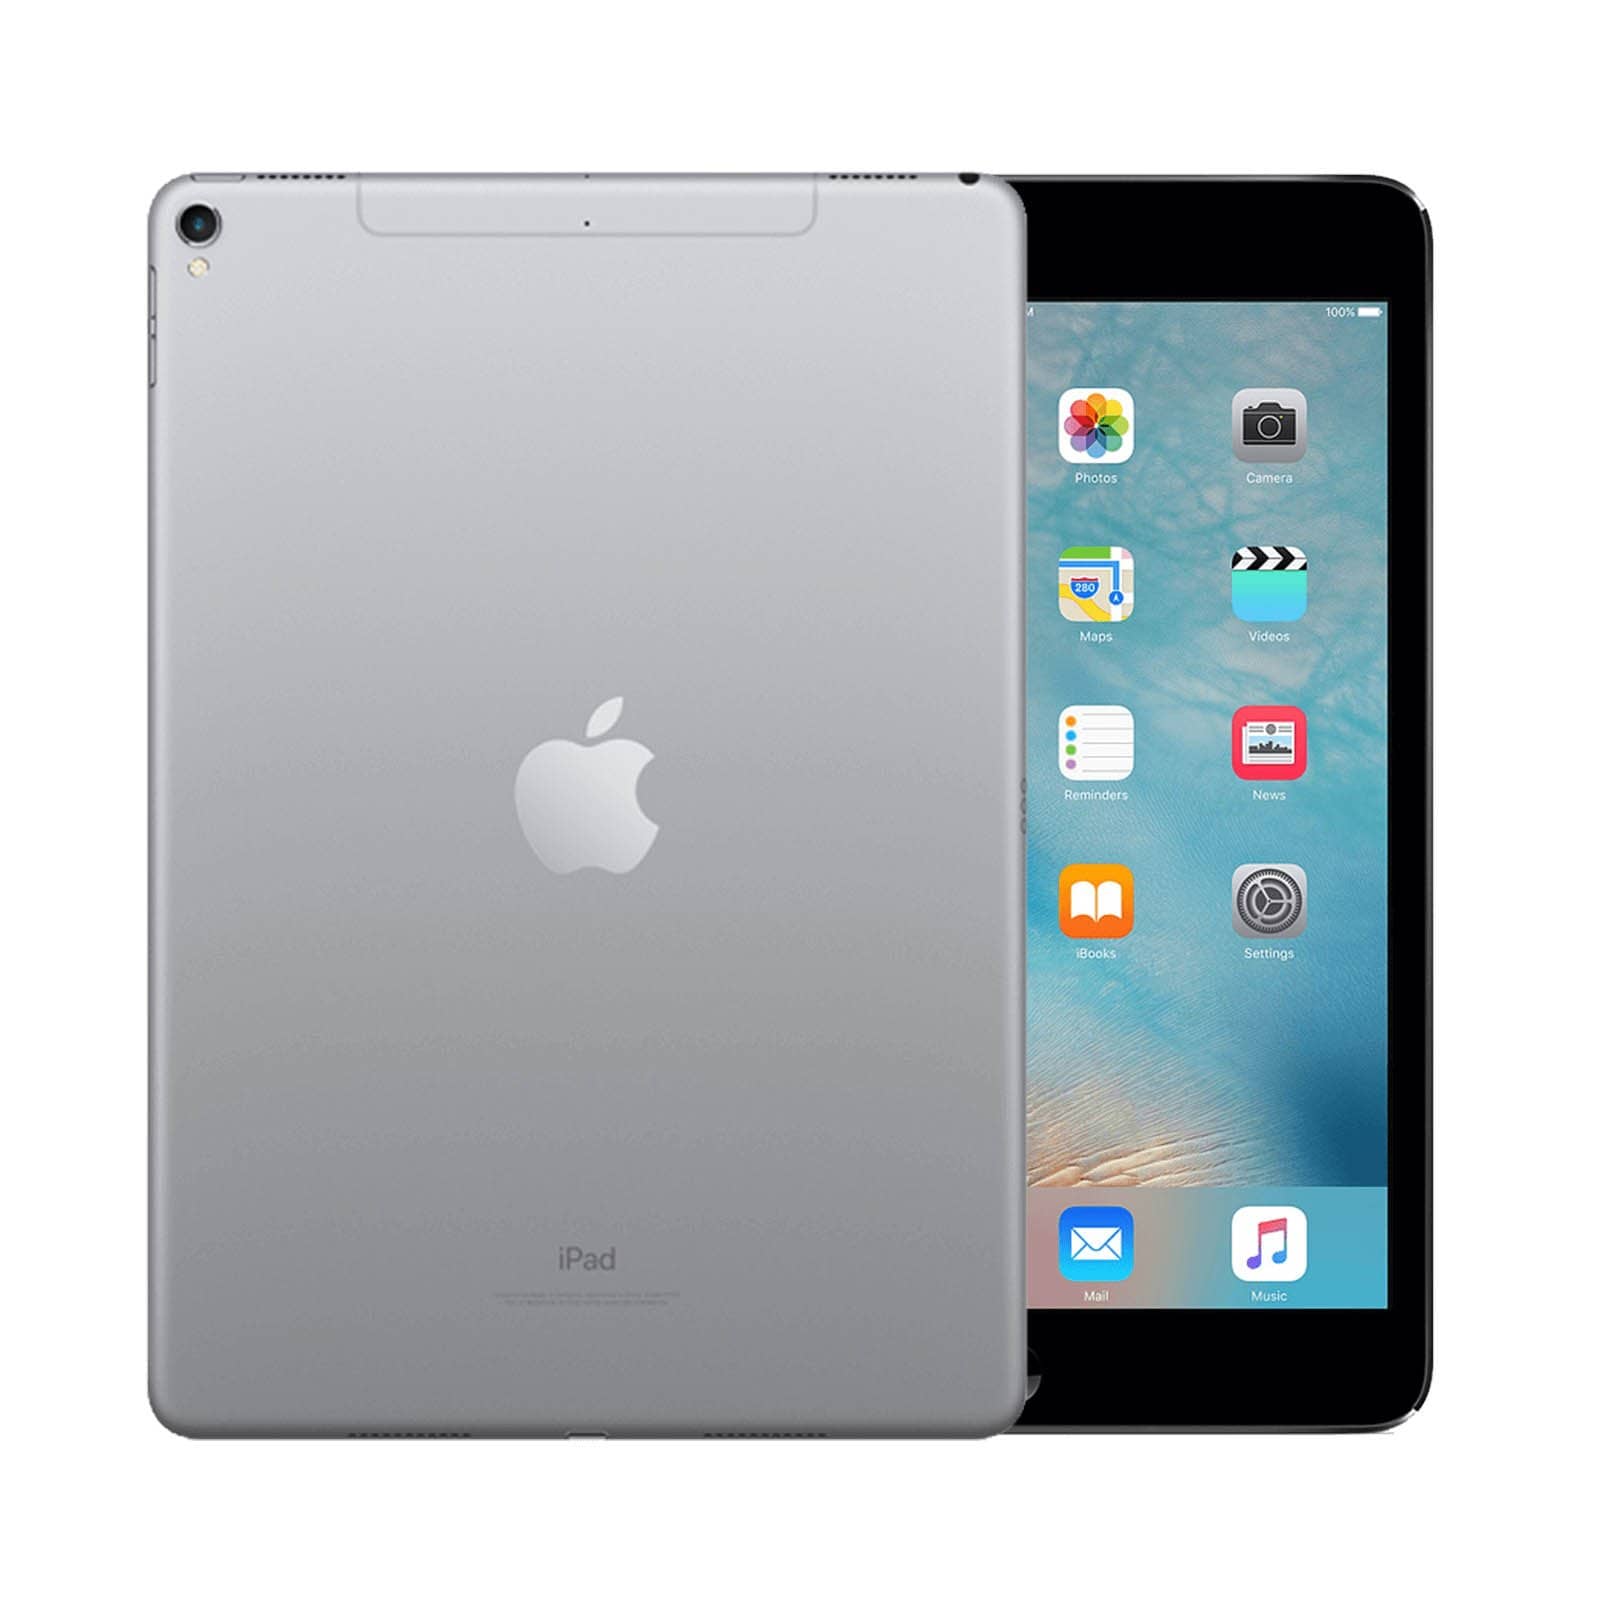 iPad Pro 9.7 Inch 32GB Space Grey Good - Unlocked 32GB Space Grey Good